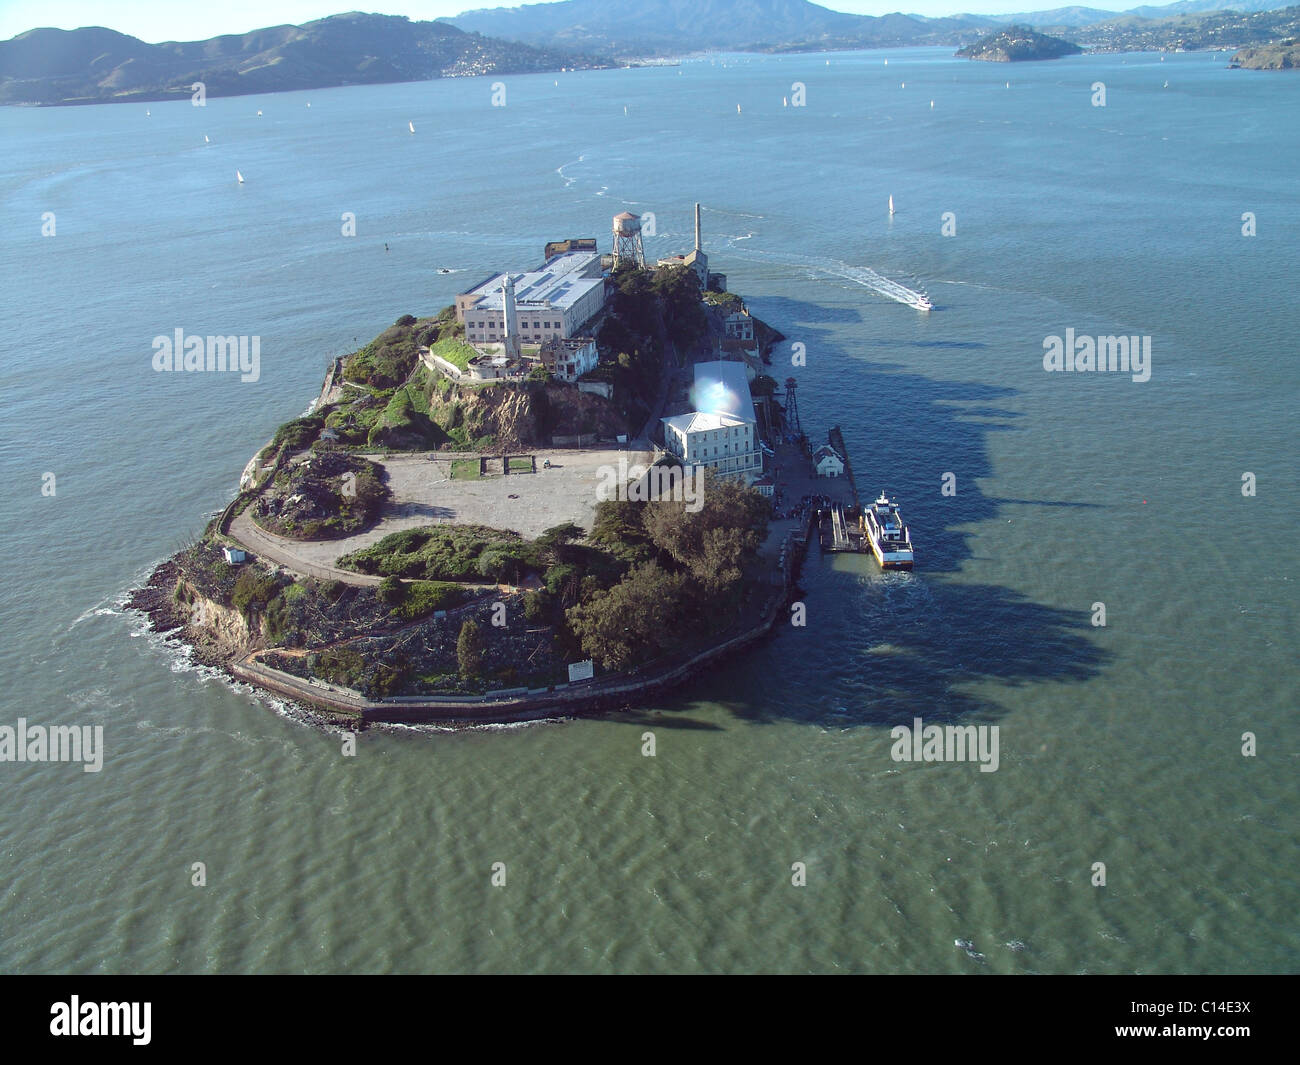 Aerial view of Alcatraz Island in San Francisco Bay Stock Photo